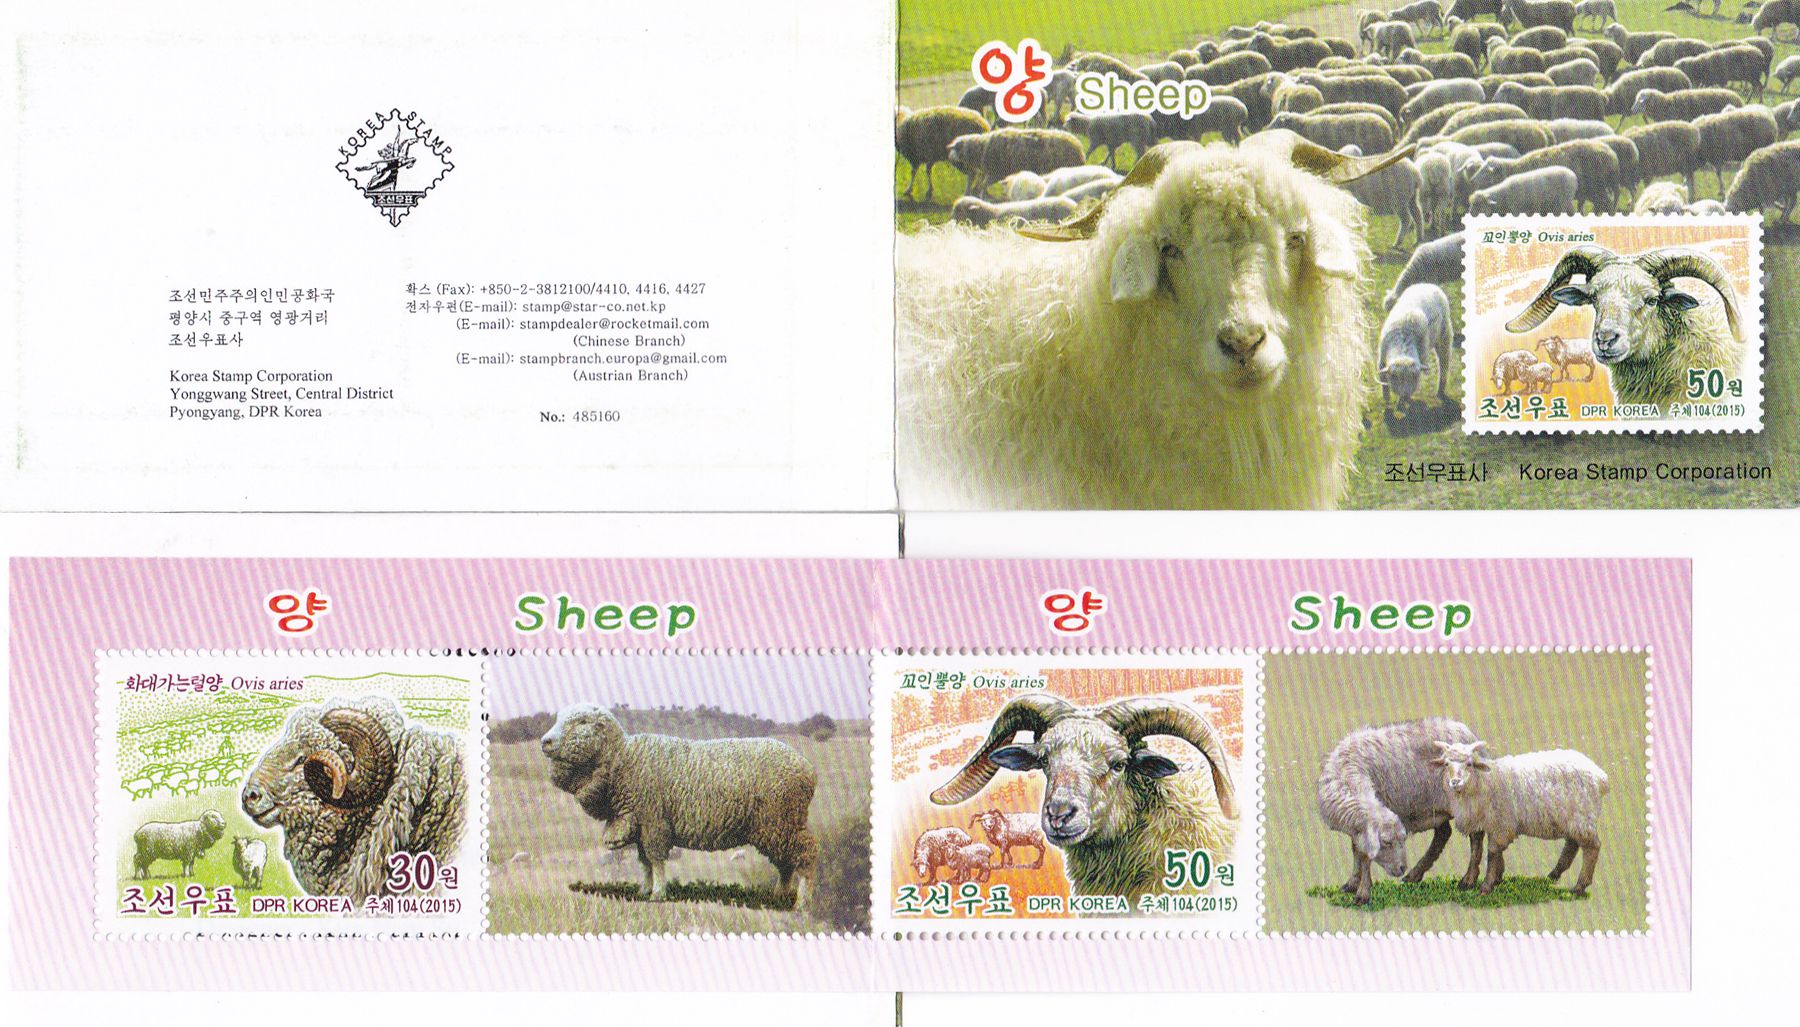 L9056, Korea "Sheep" Stamp Booklet, 2015